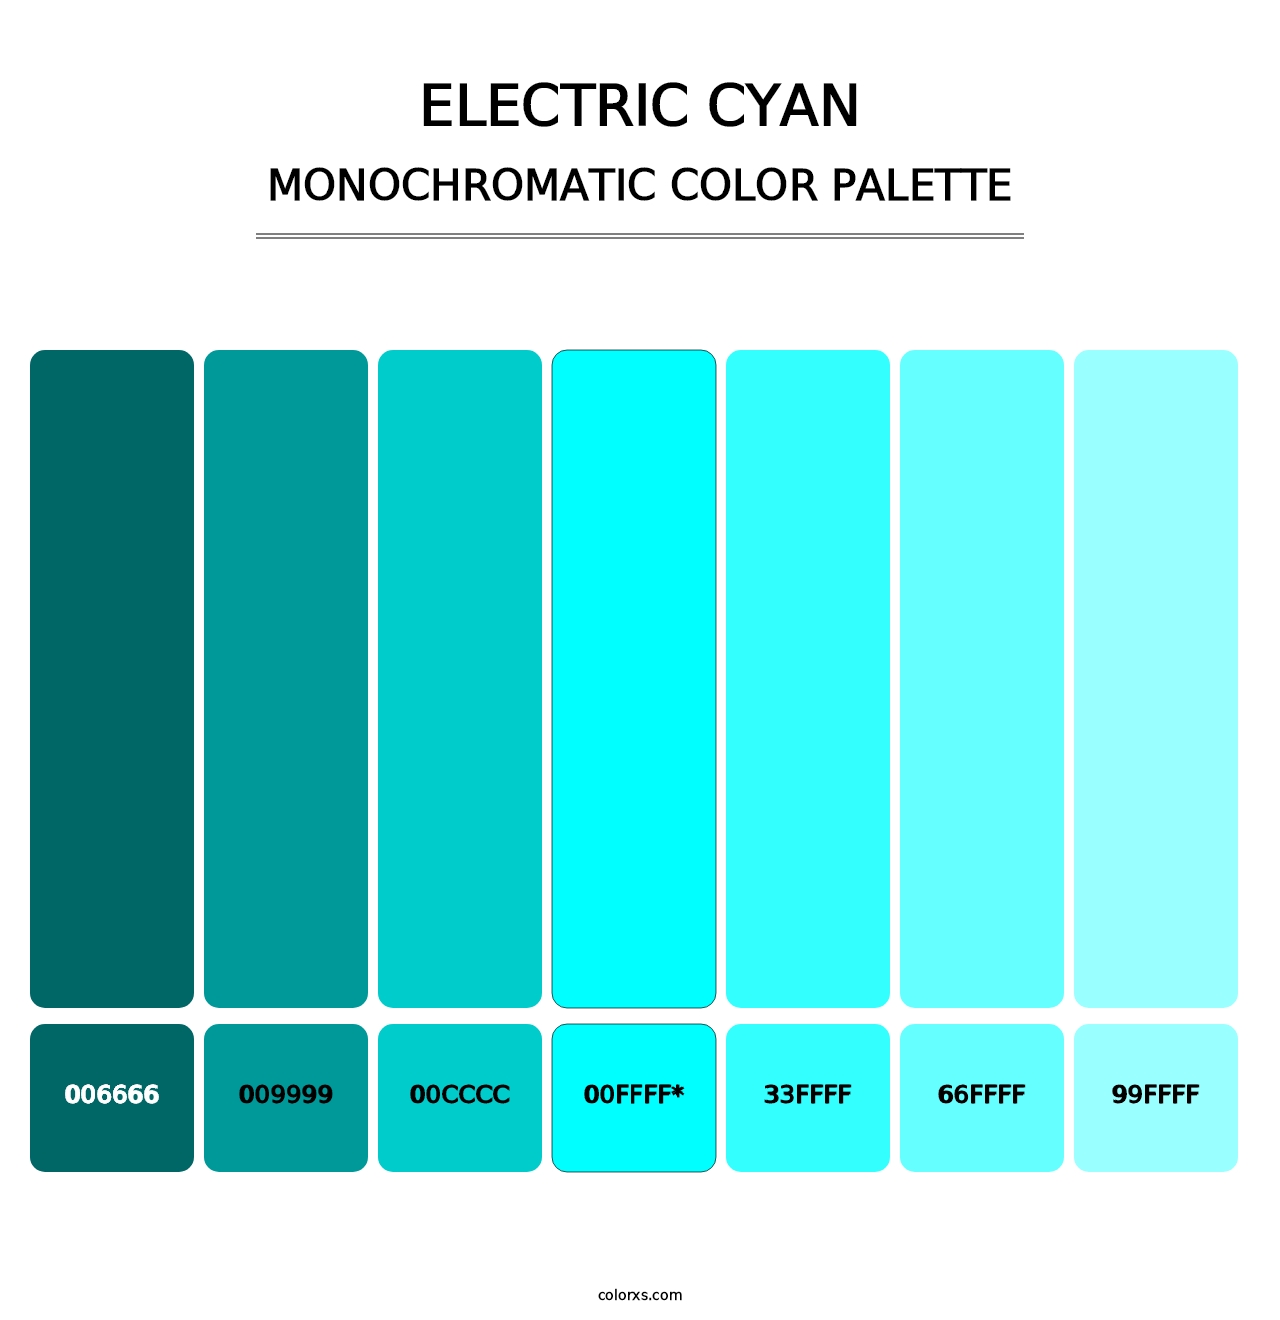 Electric Cyan - Monochromatic Color Palette